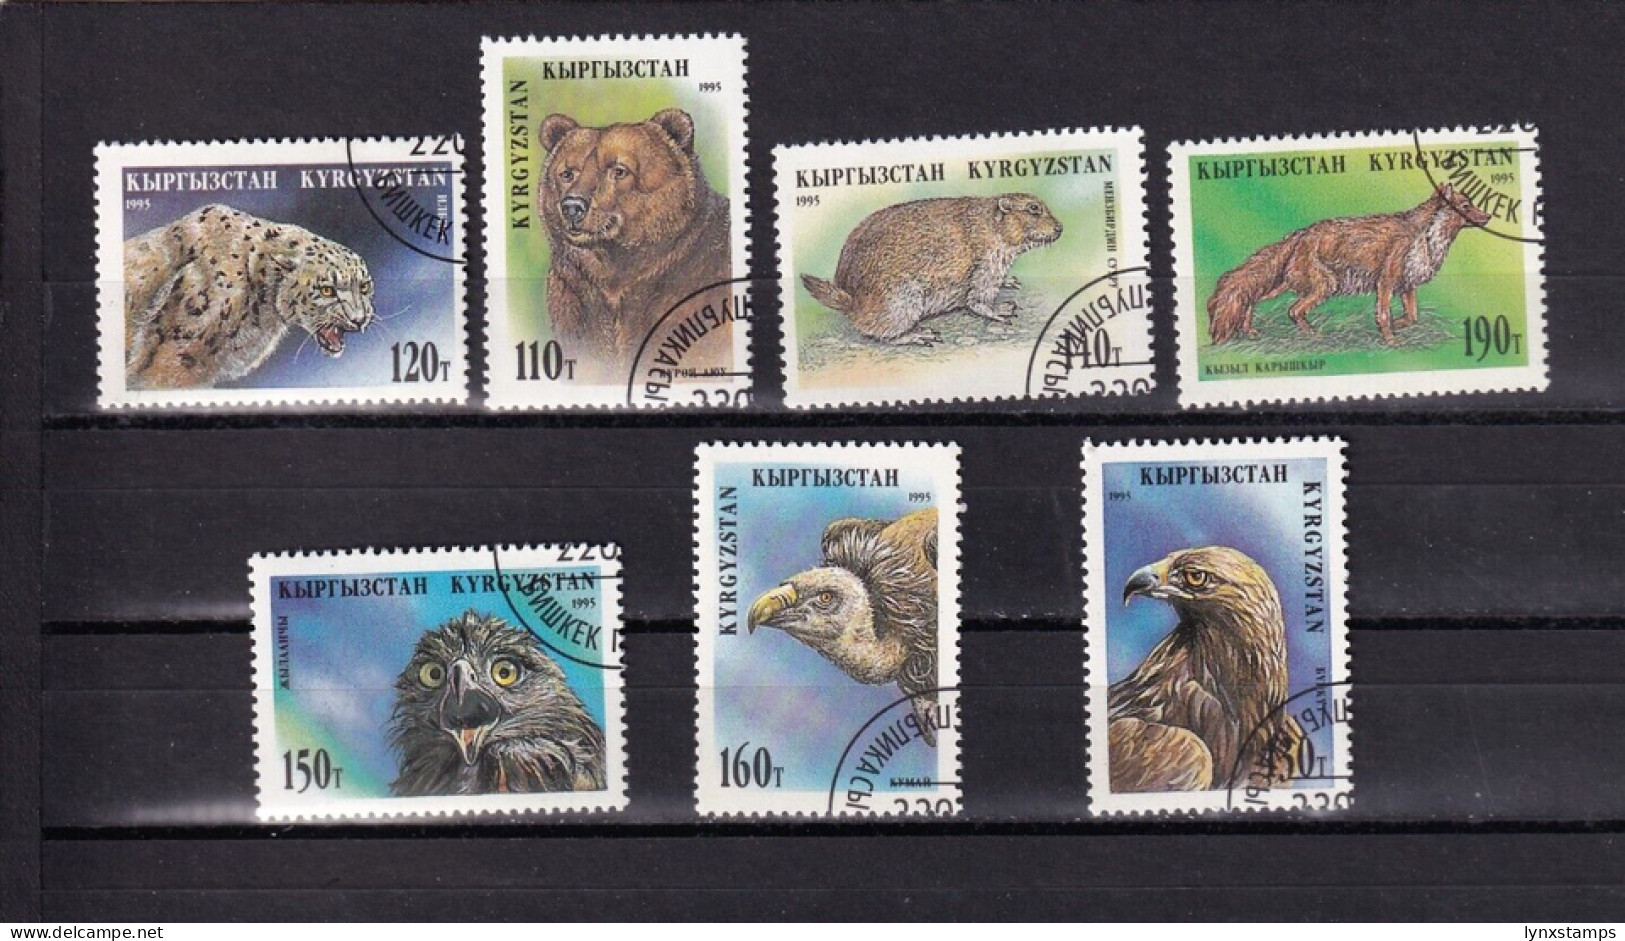 LI02 Kyrgyzstan 1995 Fauna Of Kyrgyzstan Full Set Used Stamps - Kirghizstan